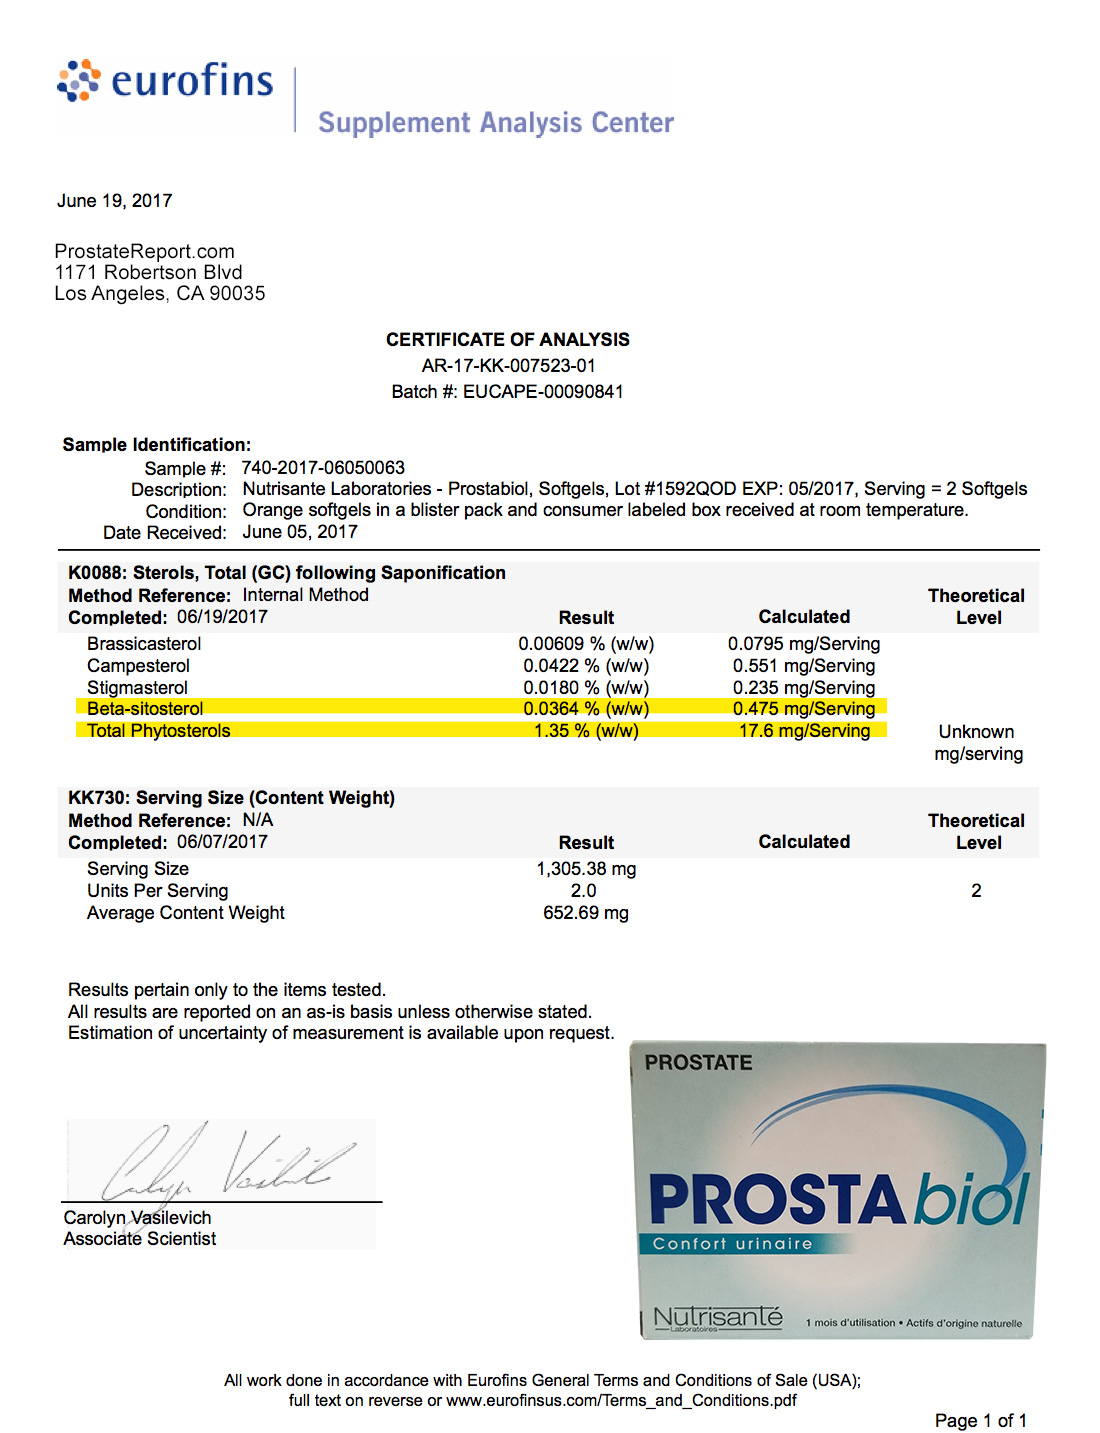 ProstaBiol lab report 